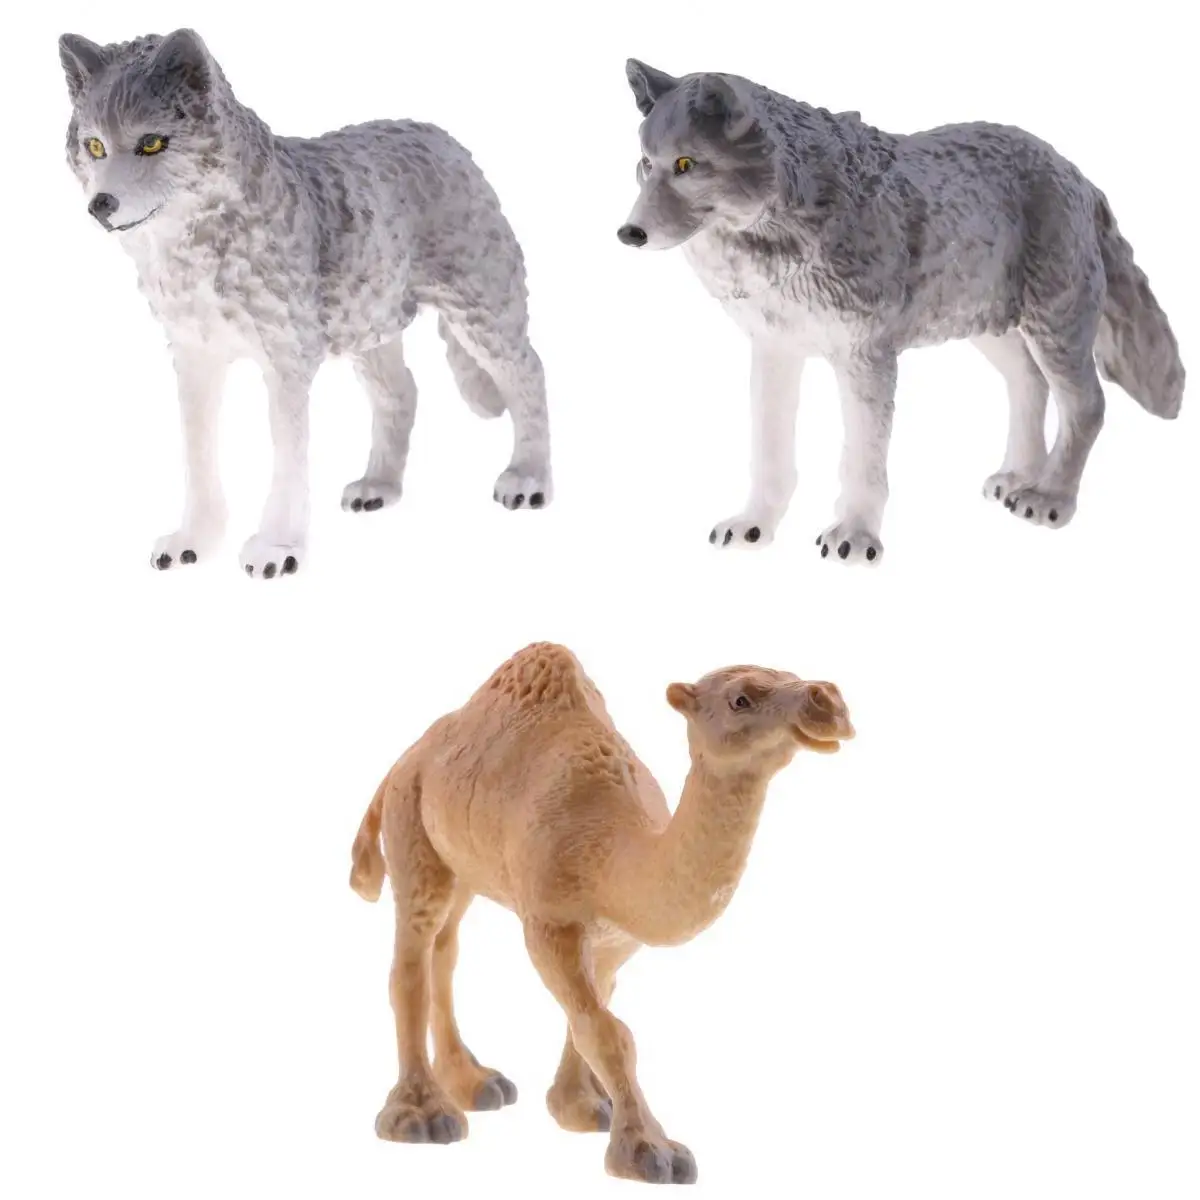 3x Animal Model Figurine Kids Educational Zoo Animal/Tree Toy Props Gifts